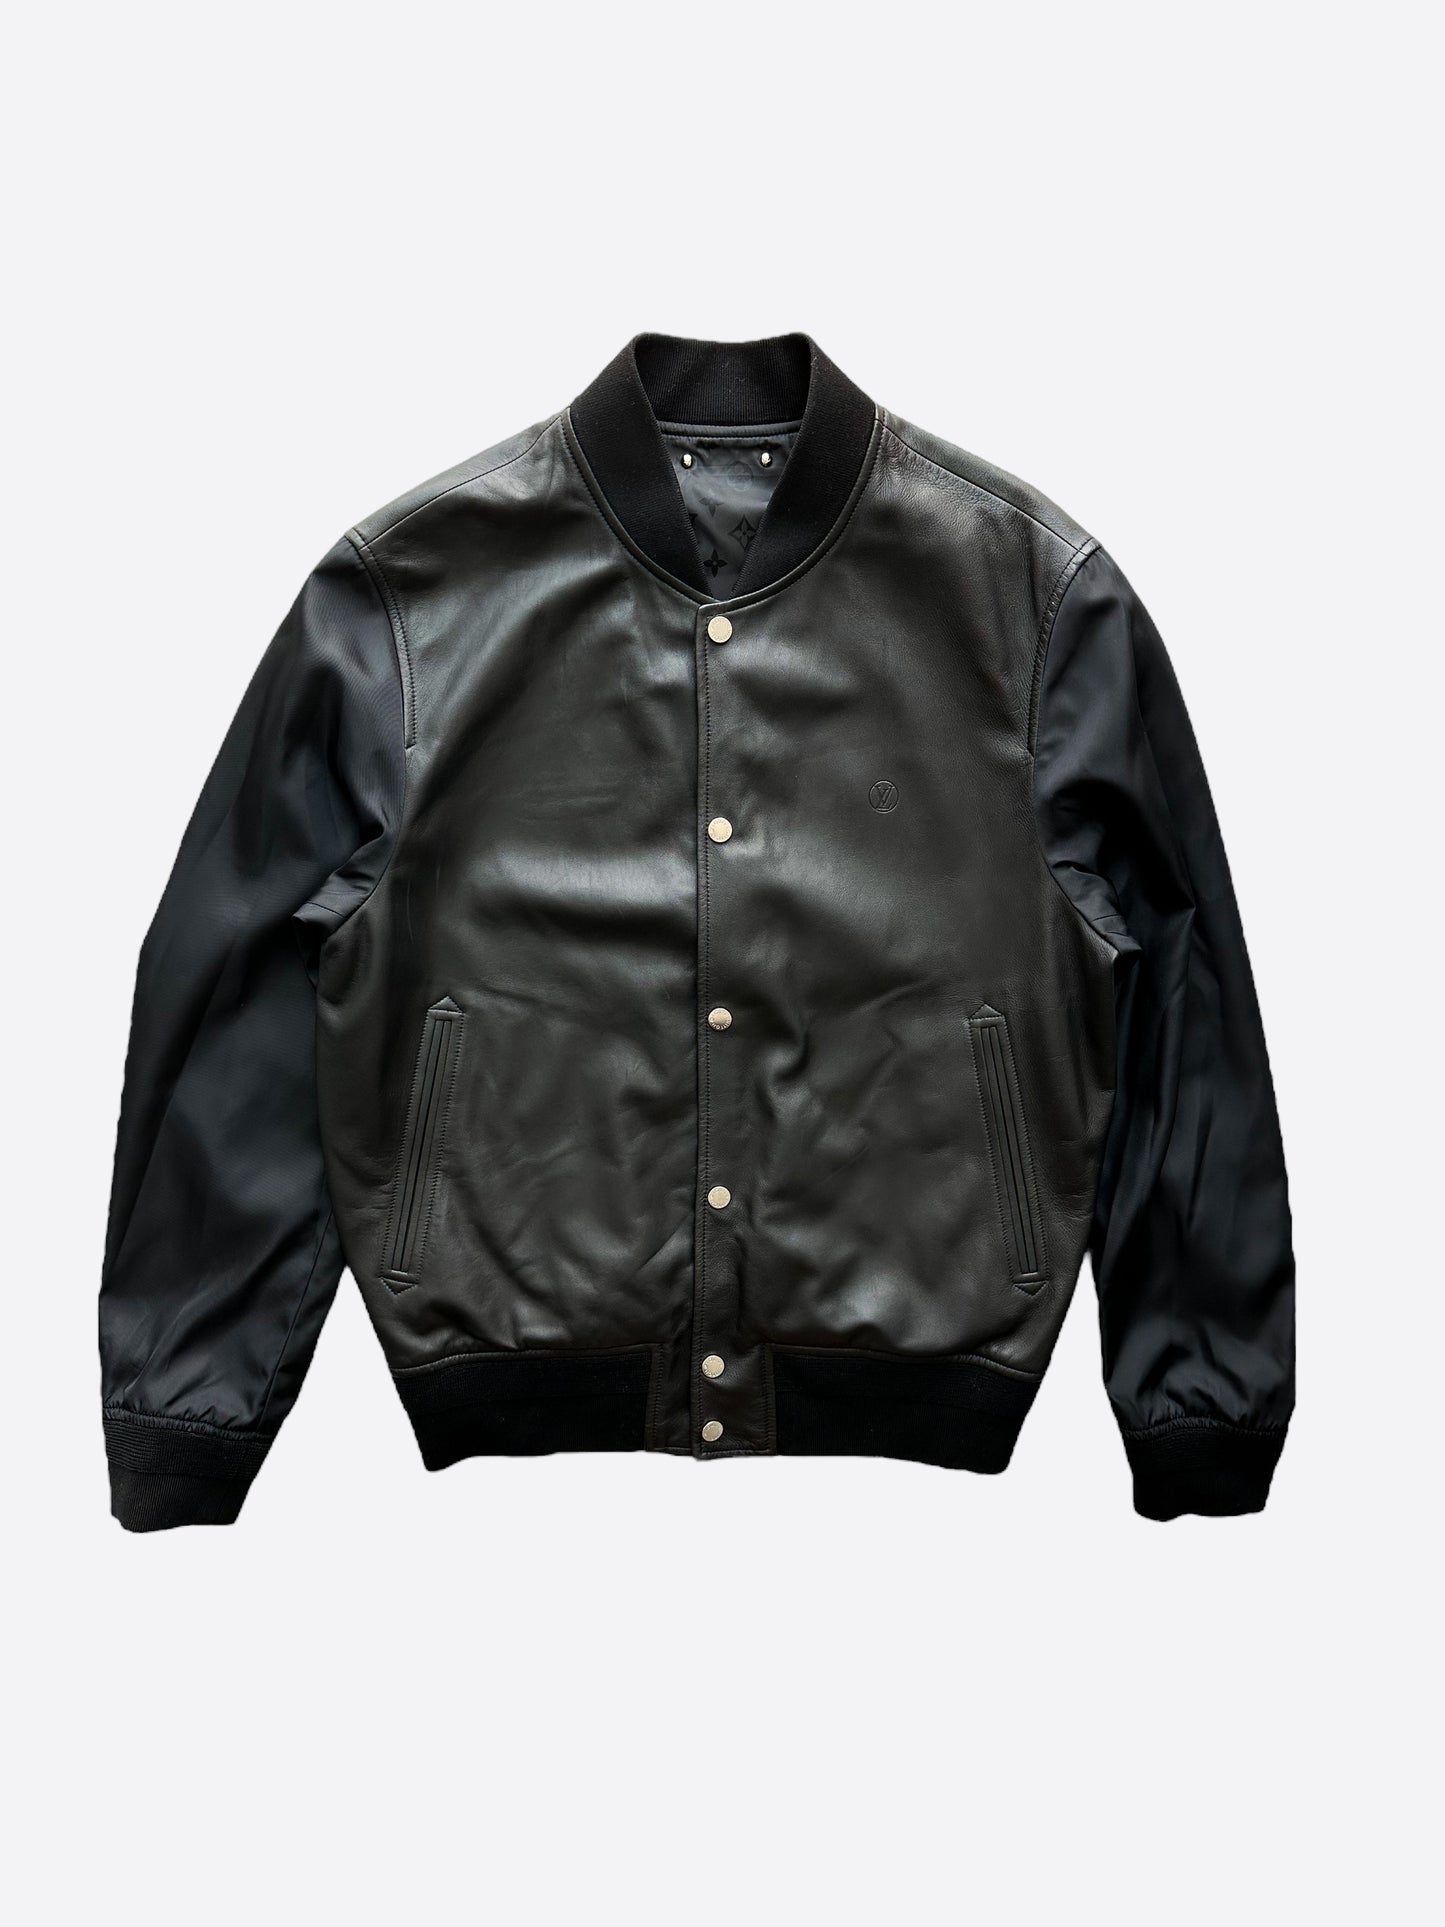 vuitton leather jacket